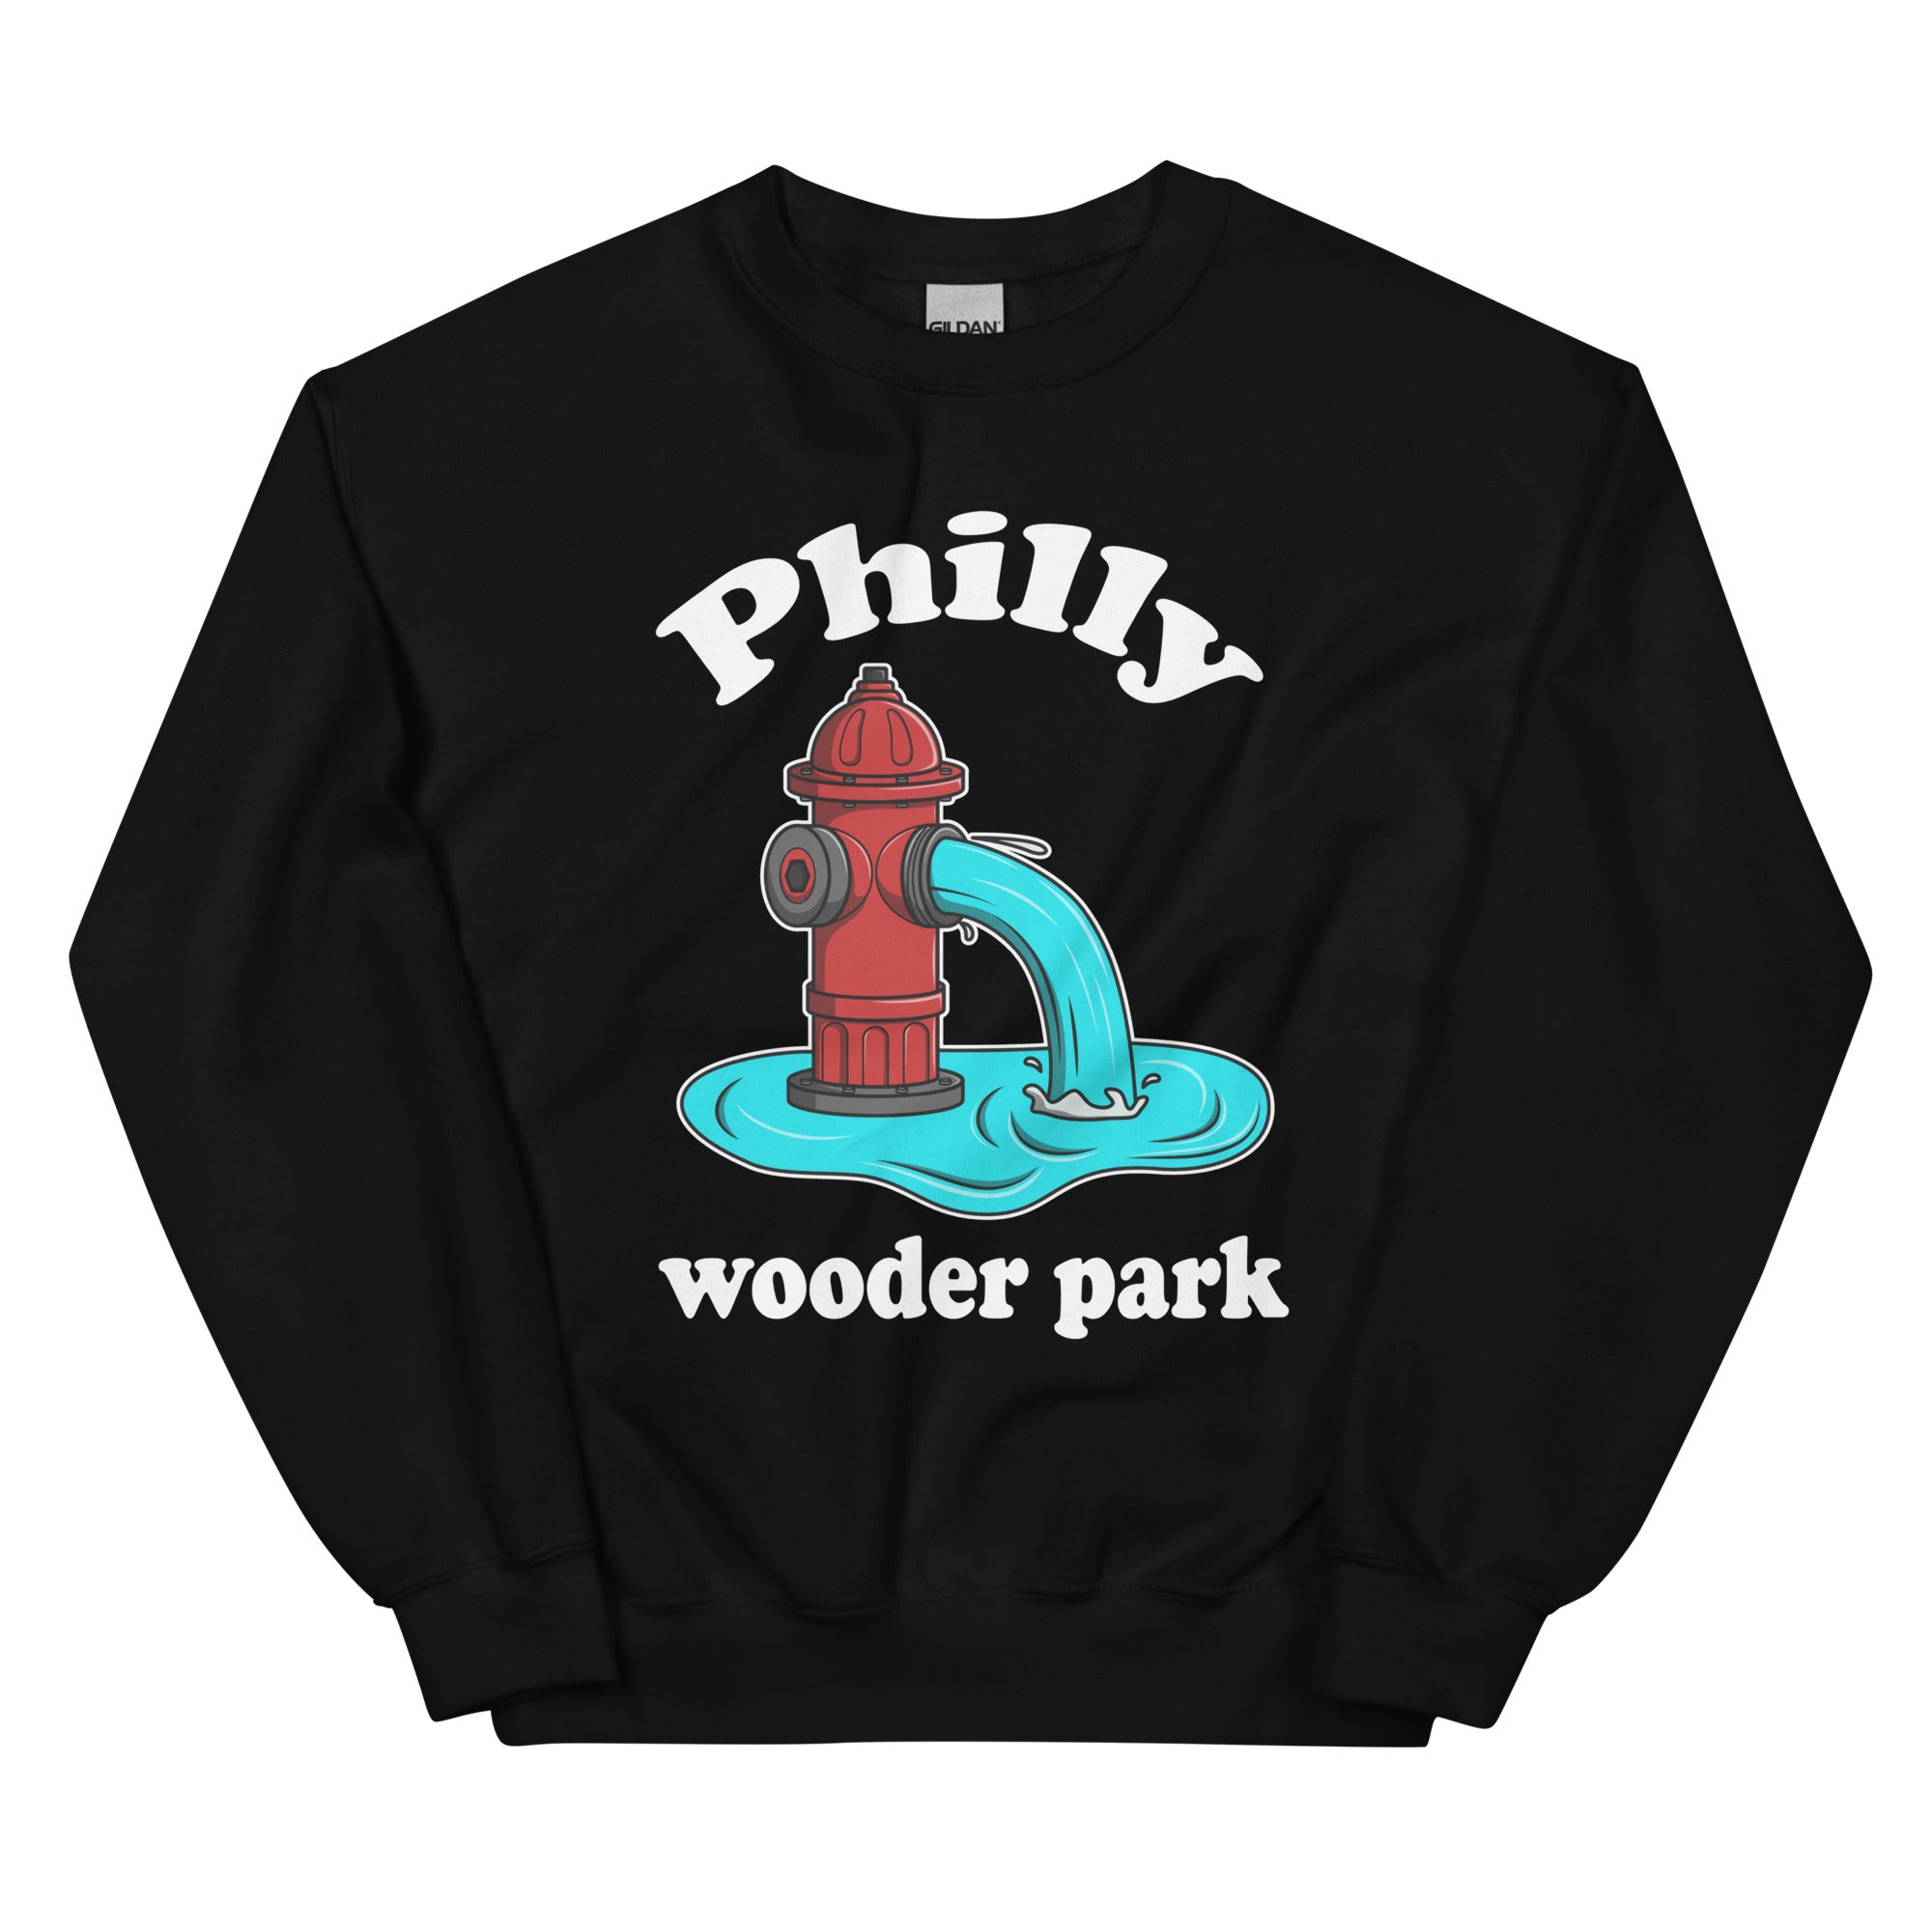 Philadelphia Philly wooder park fire hydrant funny black sweatshirt Phillygoat